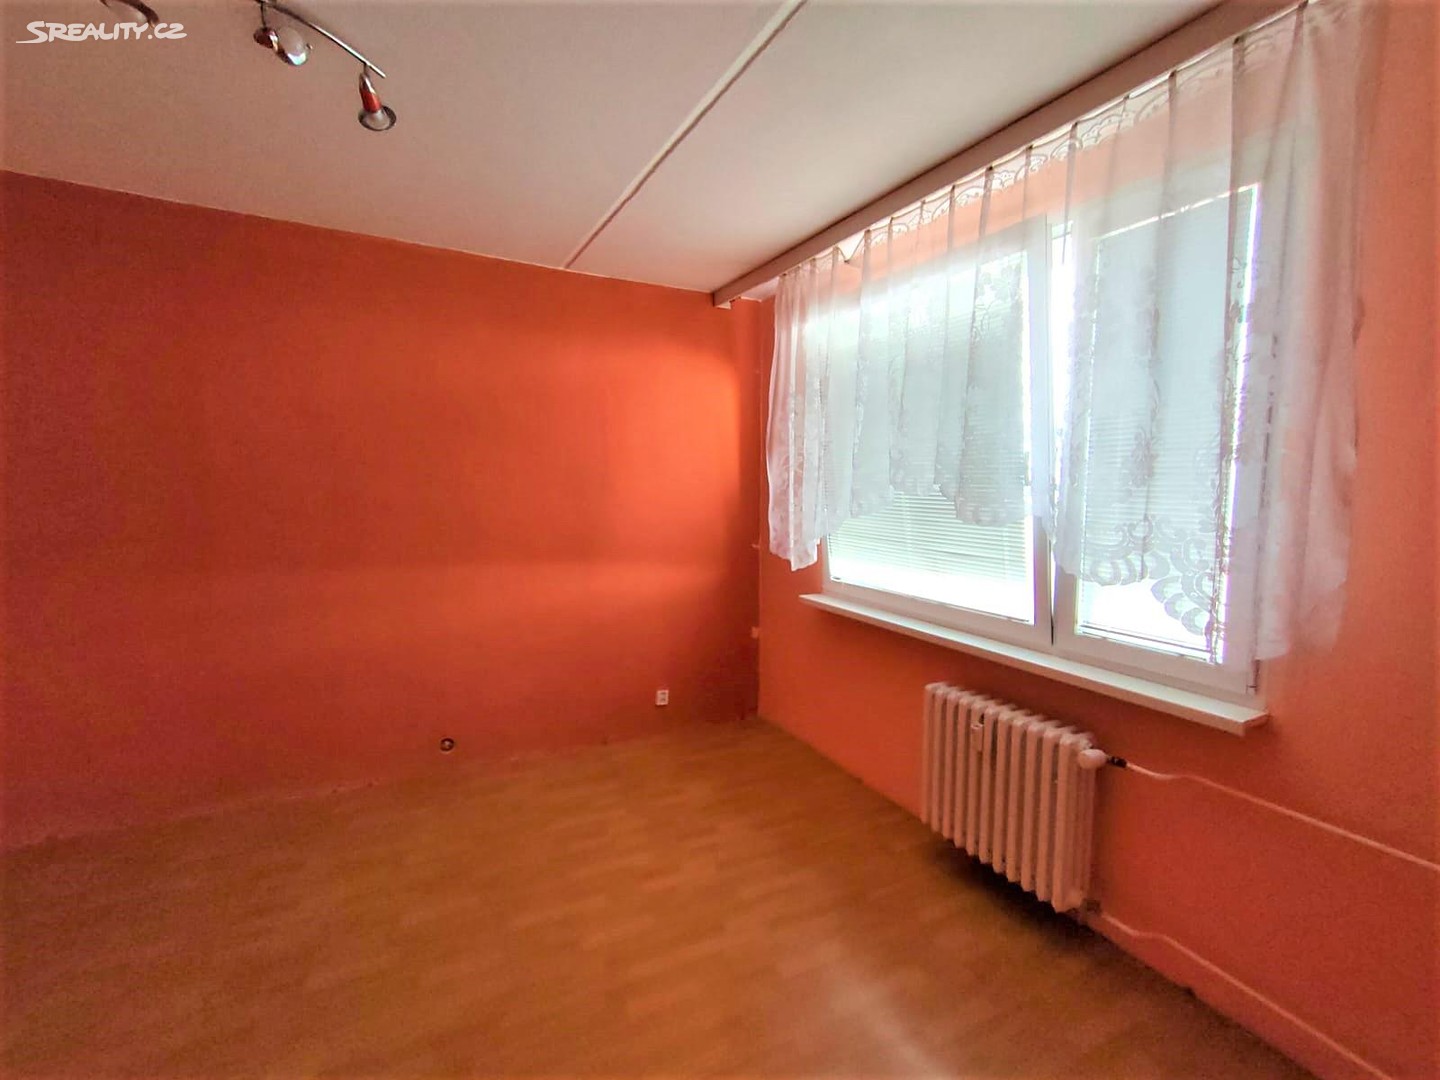 Pronájem bytu 1+1 33 m², Krušnohorská, Jirkov